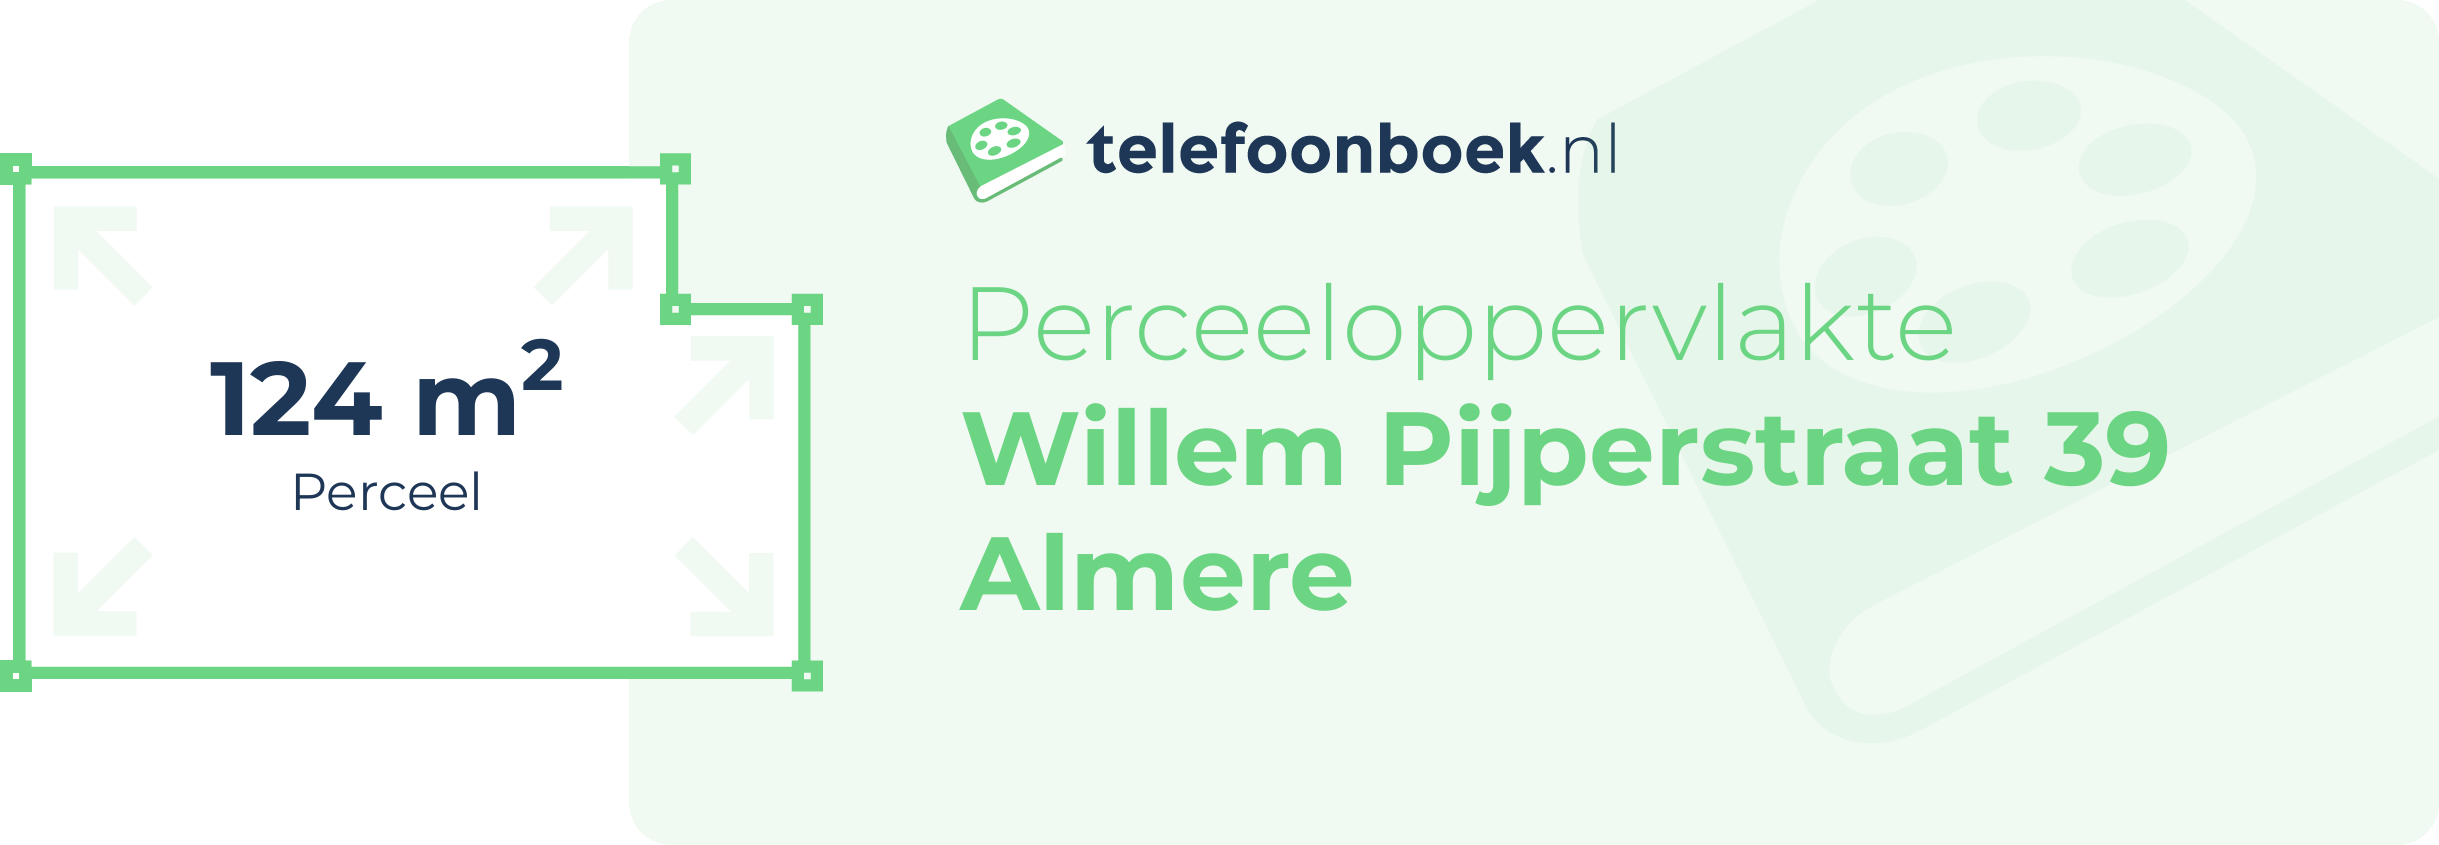 Perceeloppervlakte Willem Pijperstraat 39 Almere